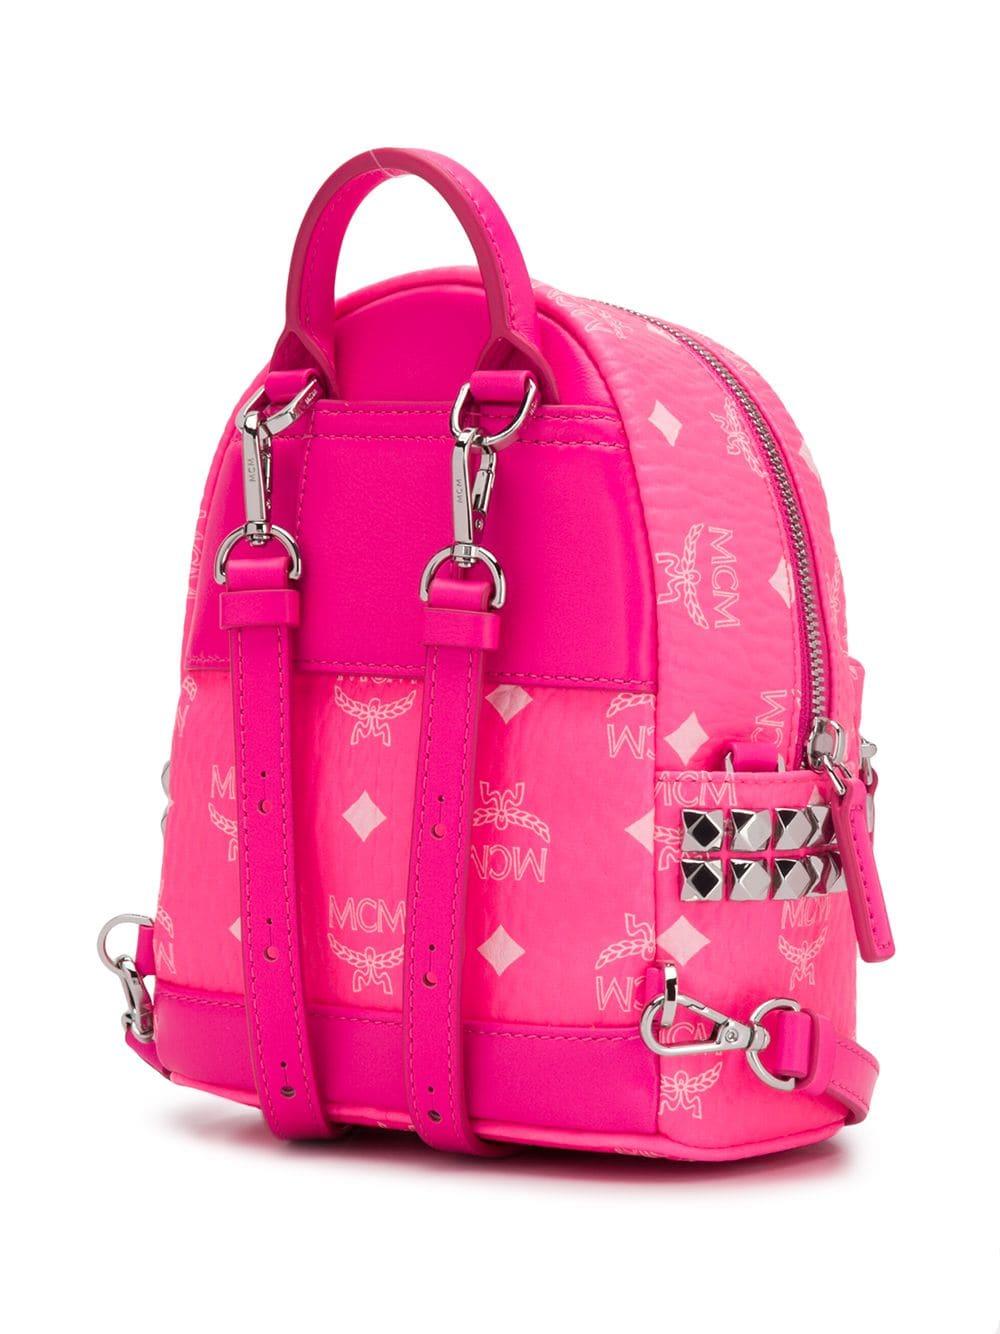 Jual MCM Stark Pink Backpack Large - Jakarta Selatan - Pristine